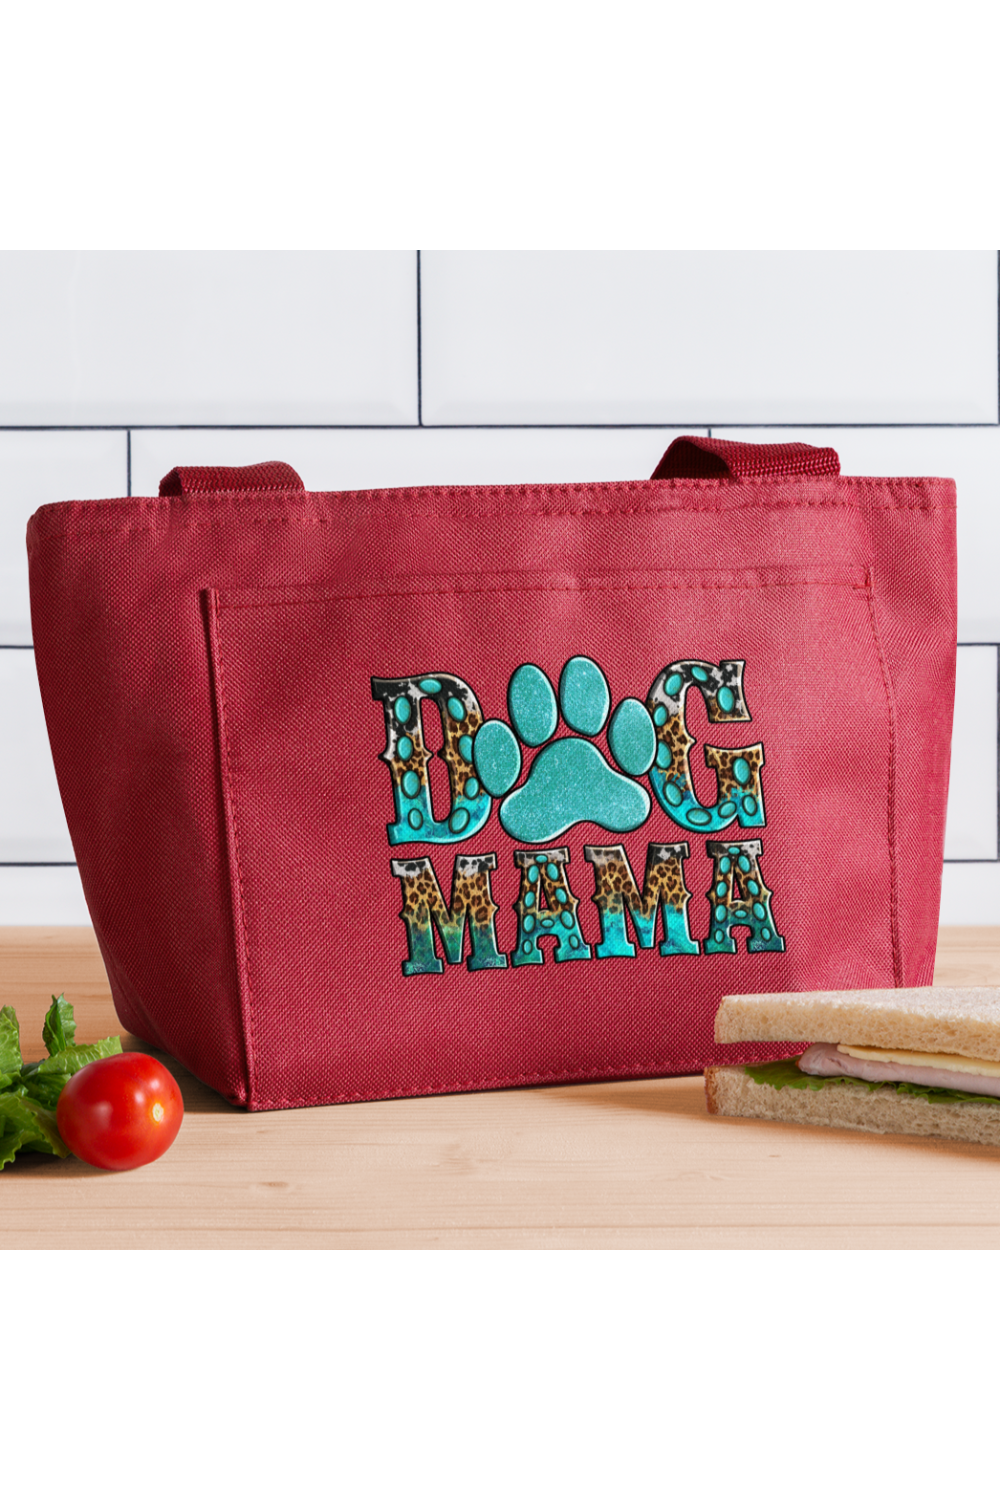 Women Dog Mama Lunch Bag - red - NicholesGifts.online